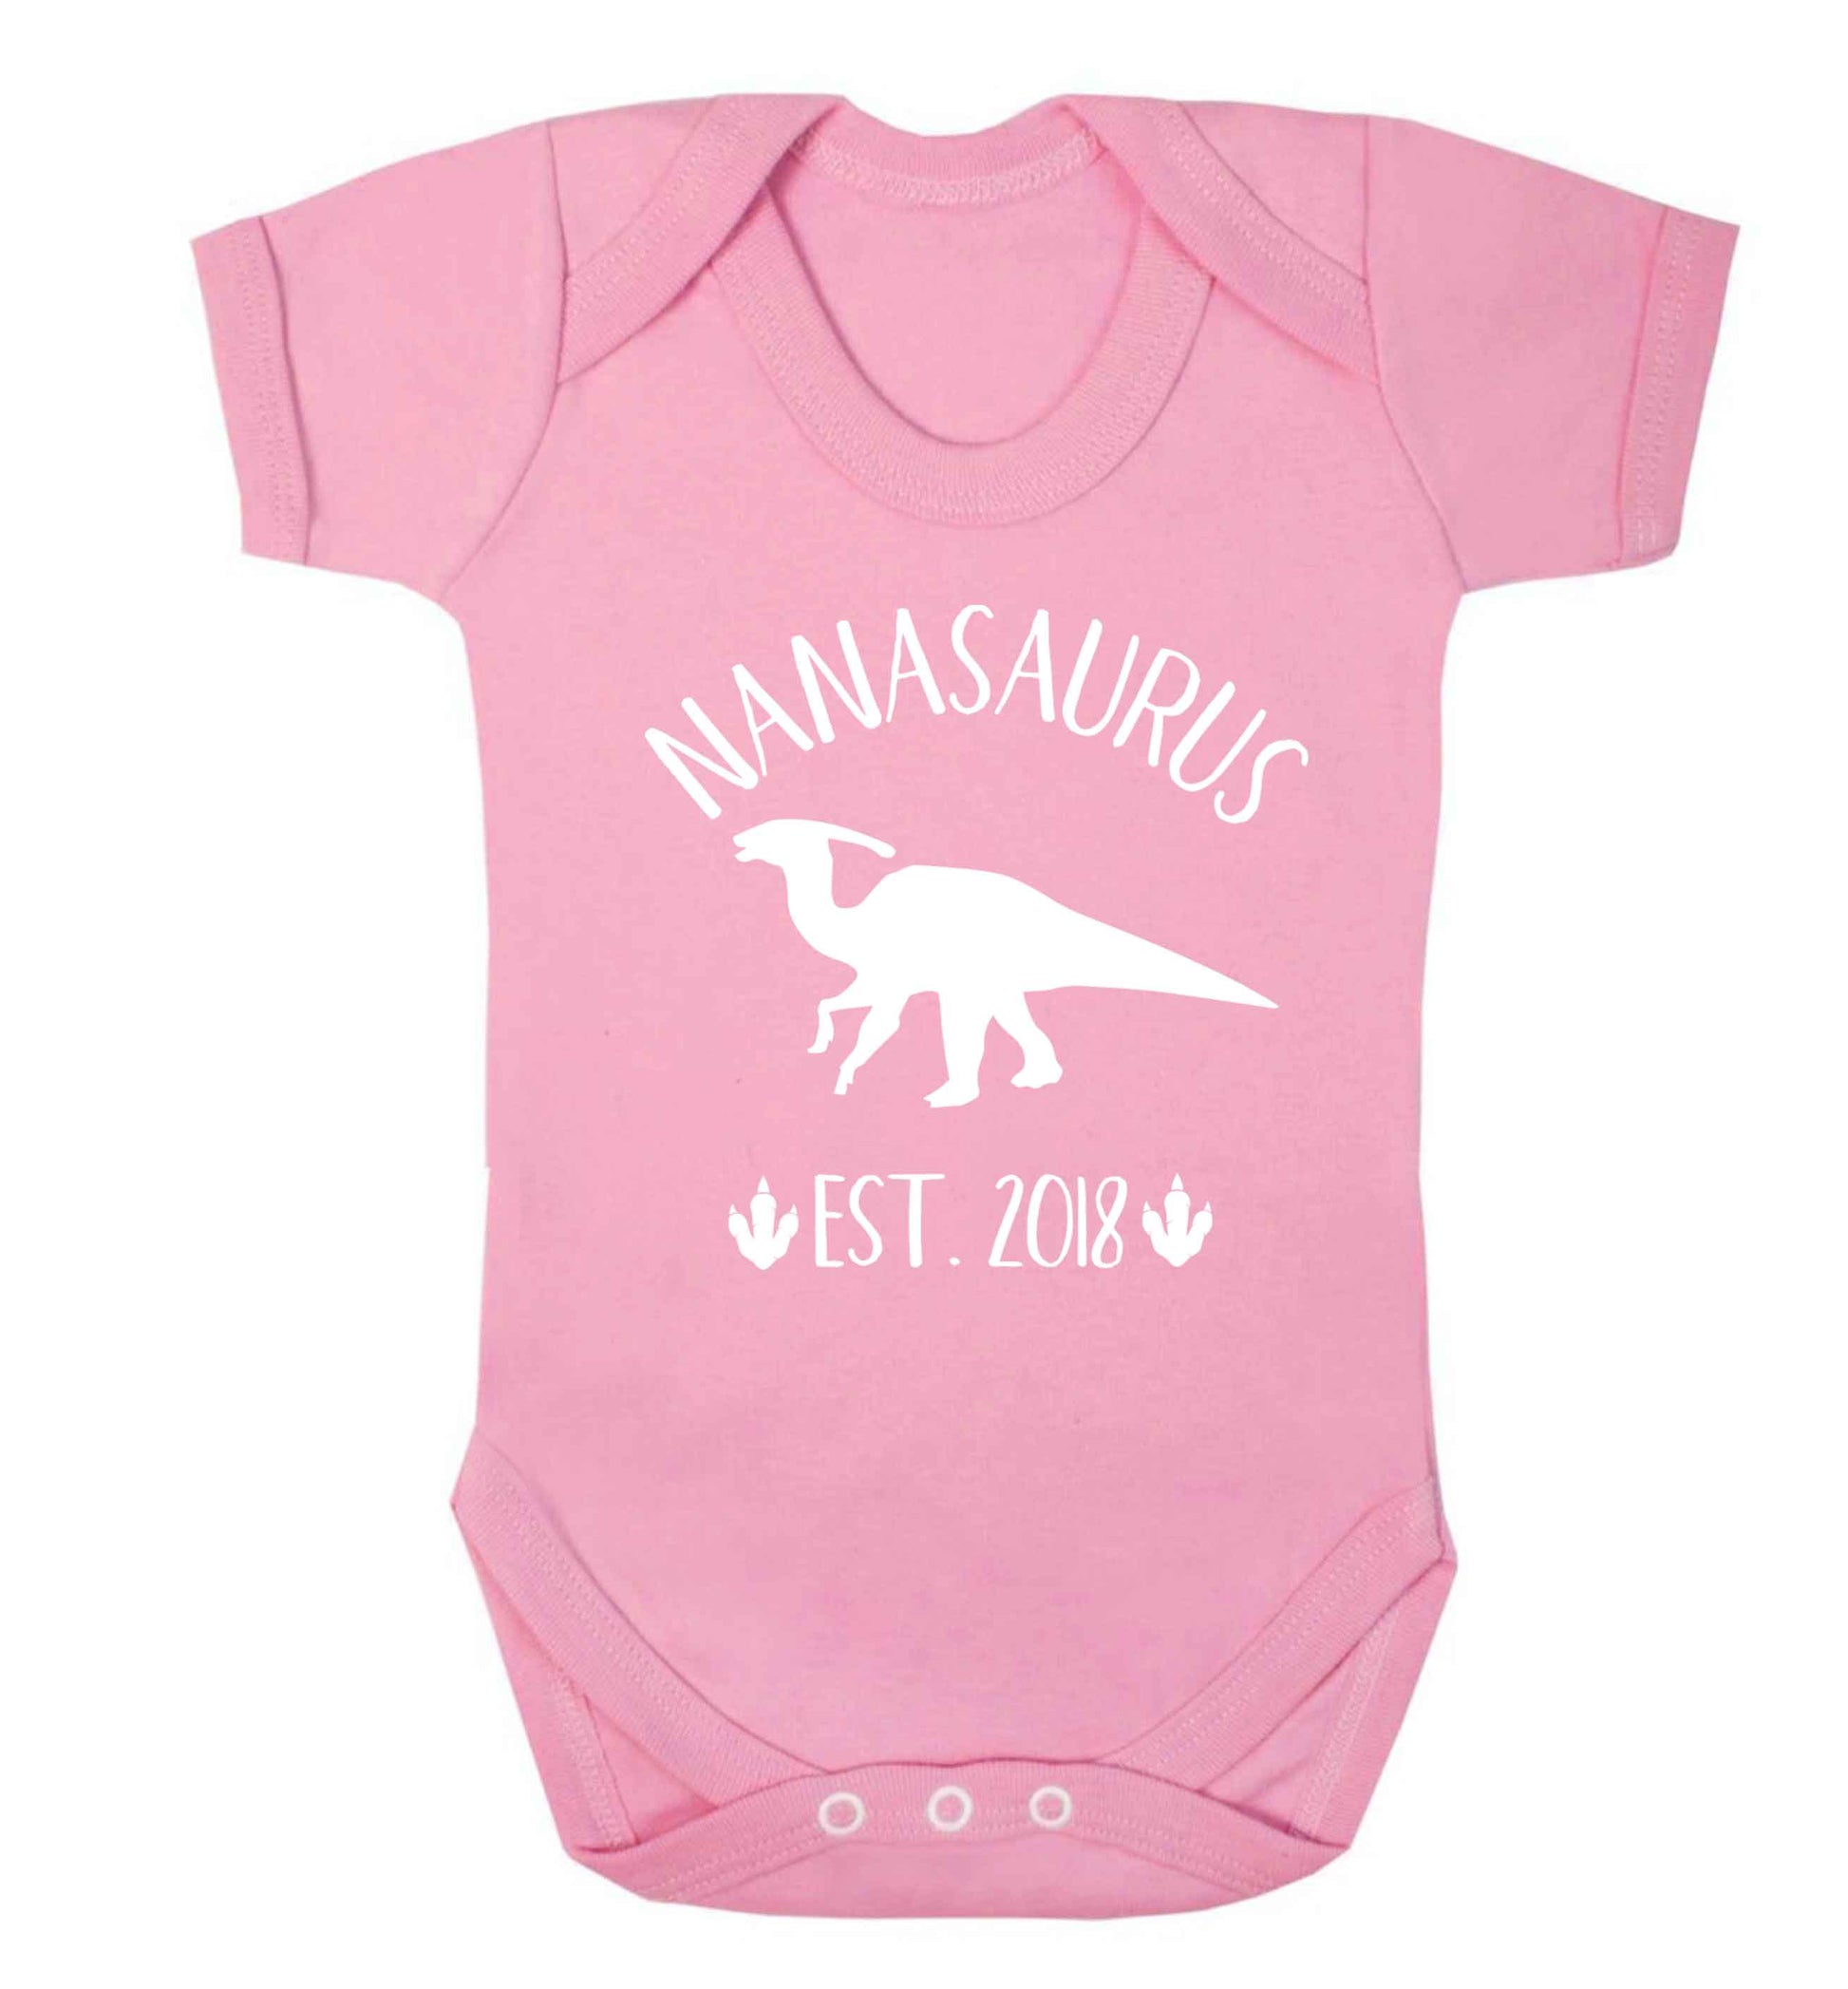 Personalised nanasaurus since (custom date) Baby Vest pale pink 18-24 months